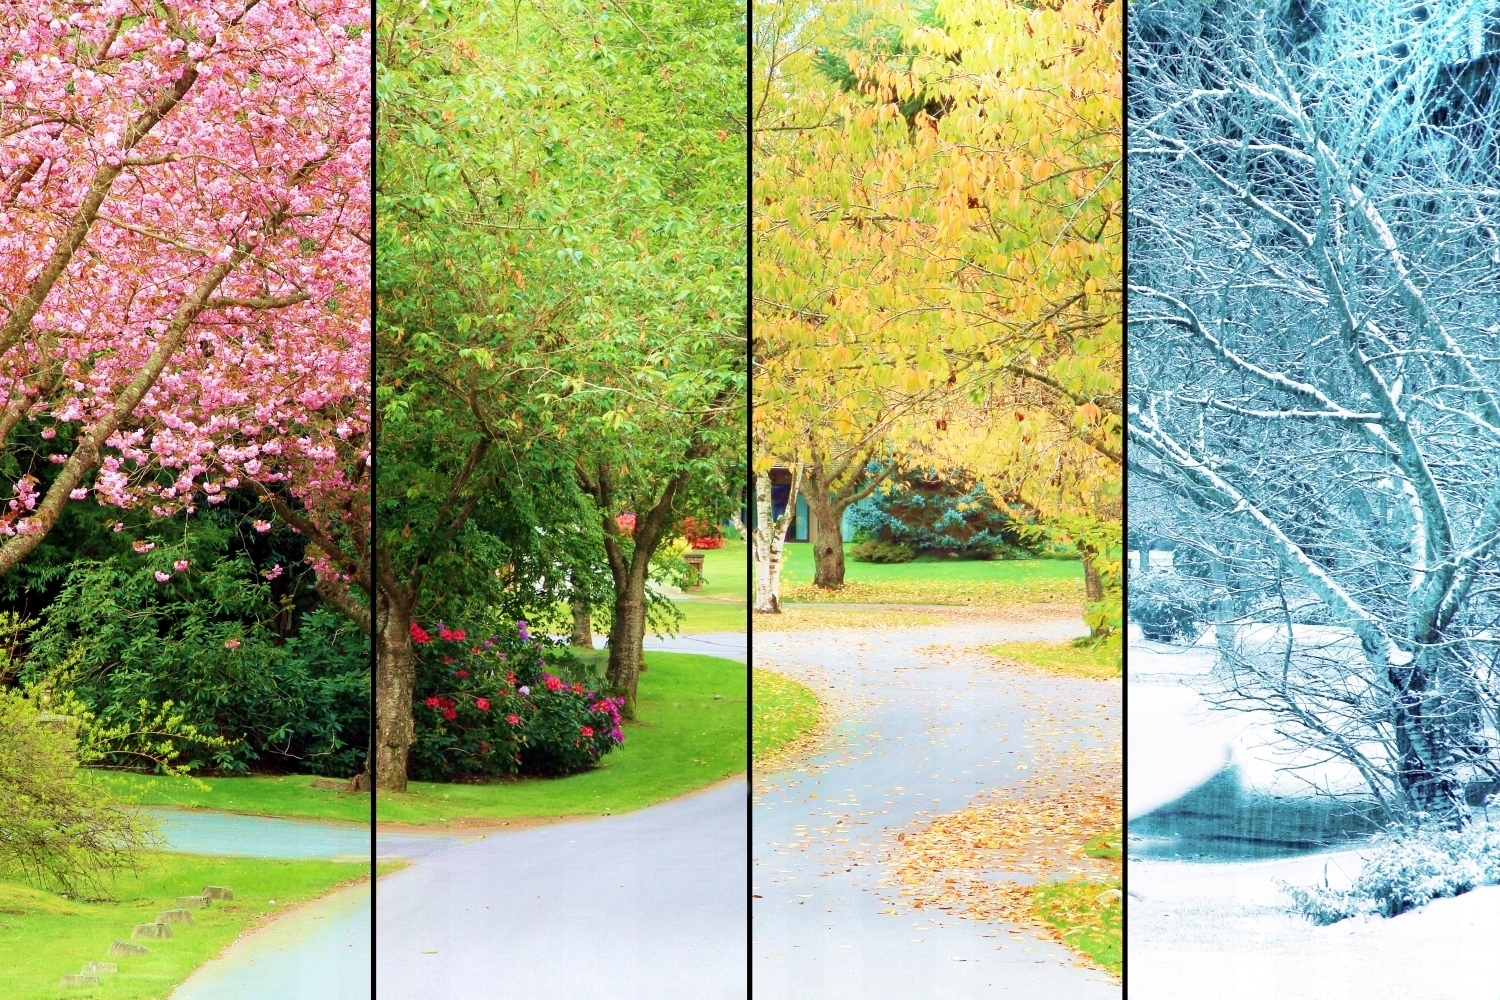 Four seasons of Japan.